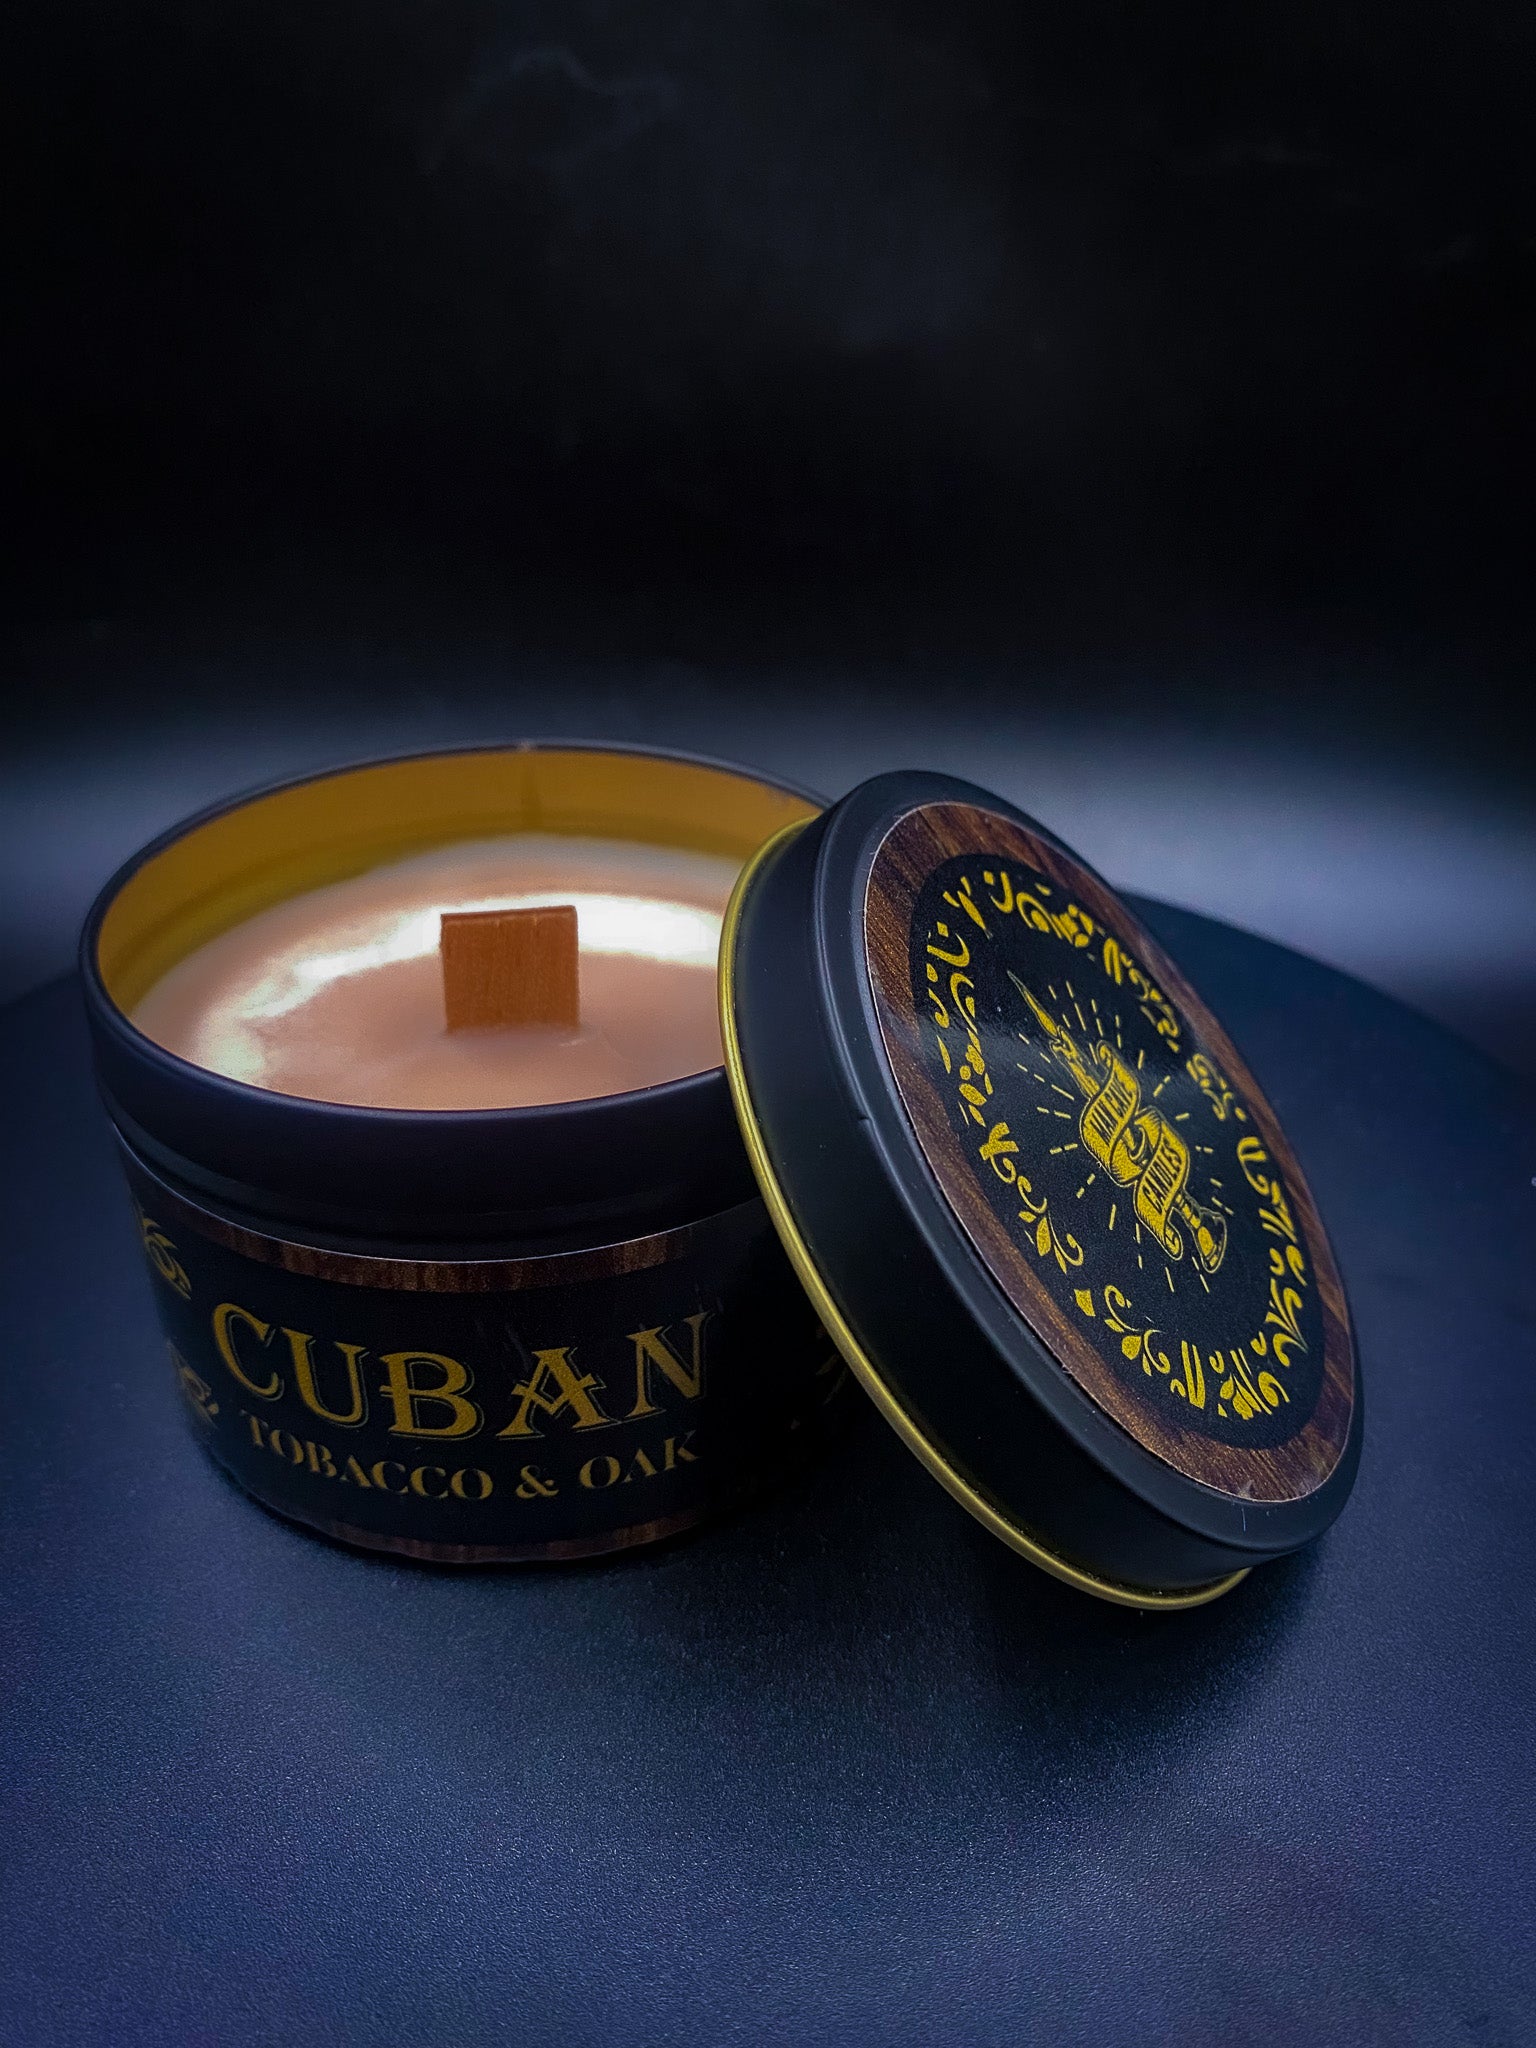 Cuban - Tobacco & Oak Scented Candle